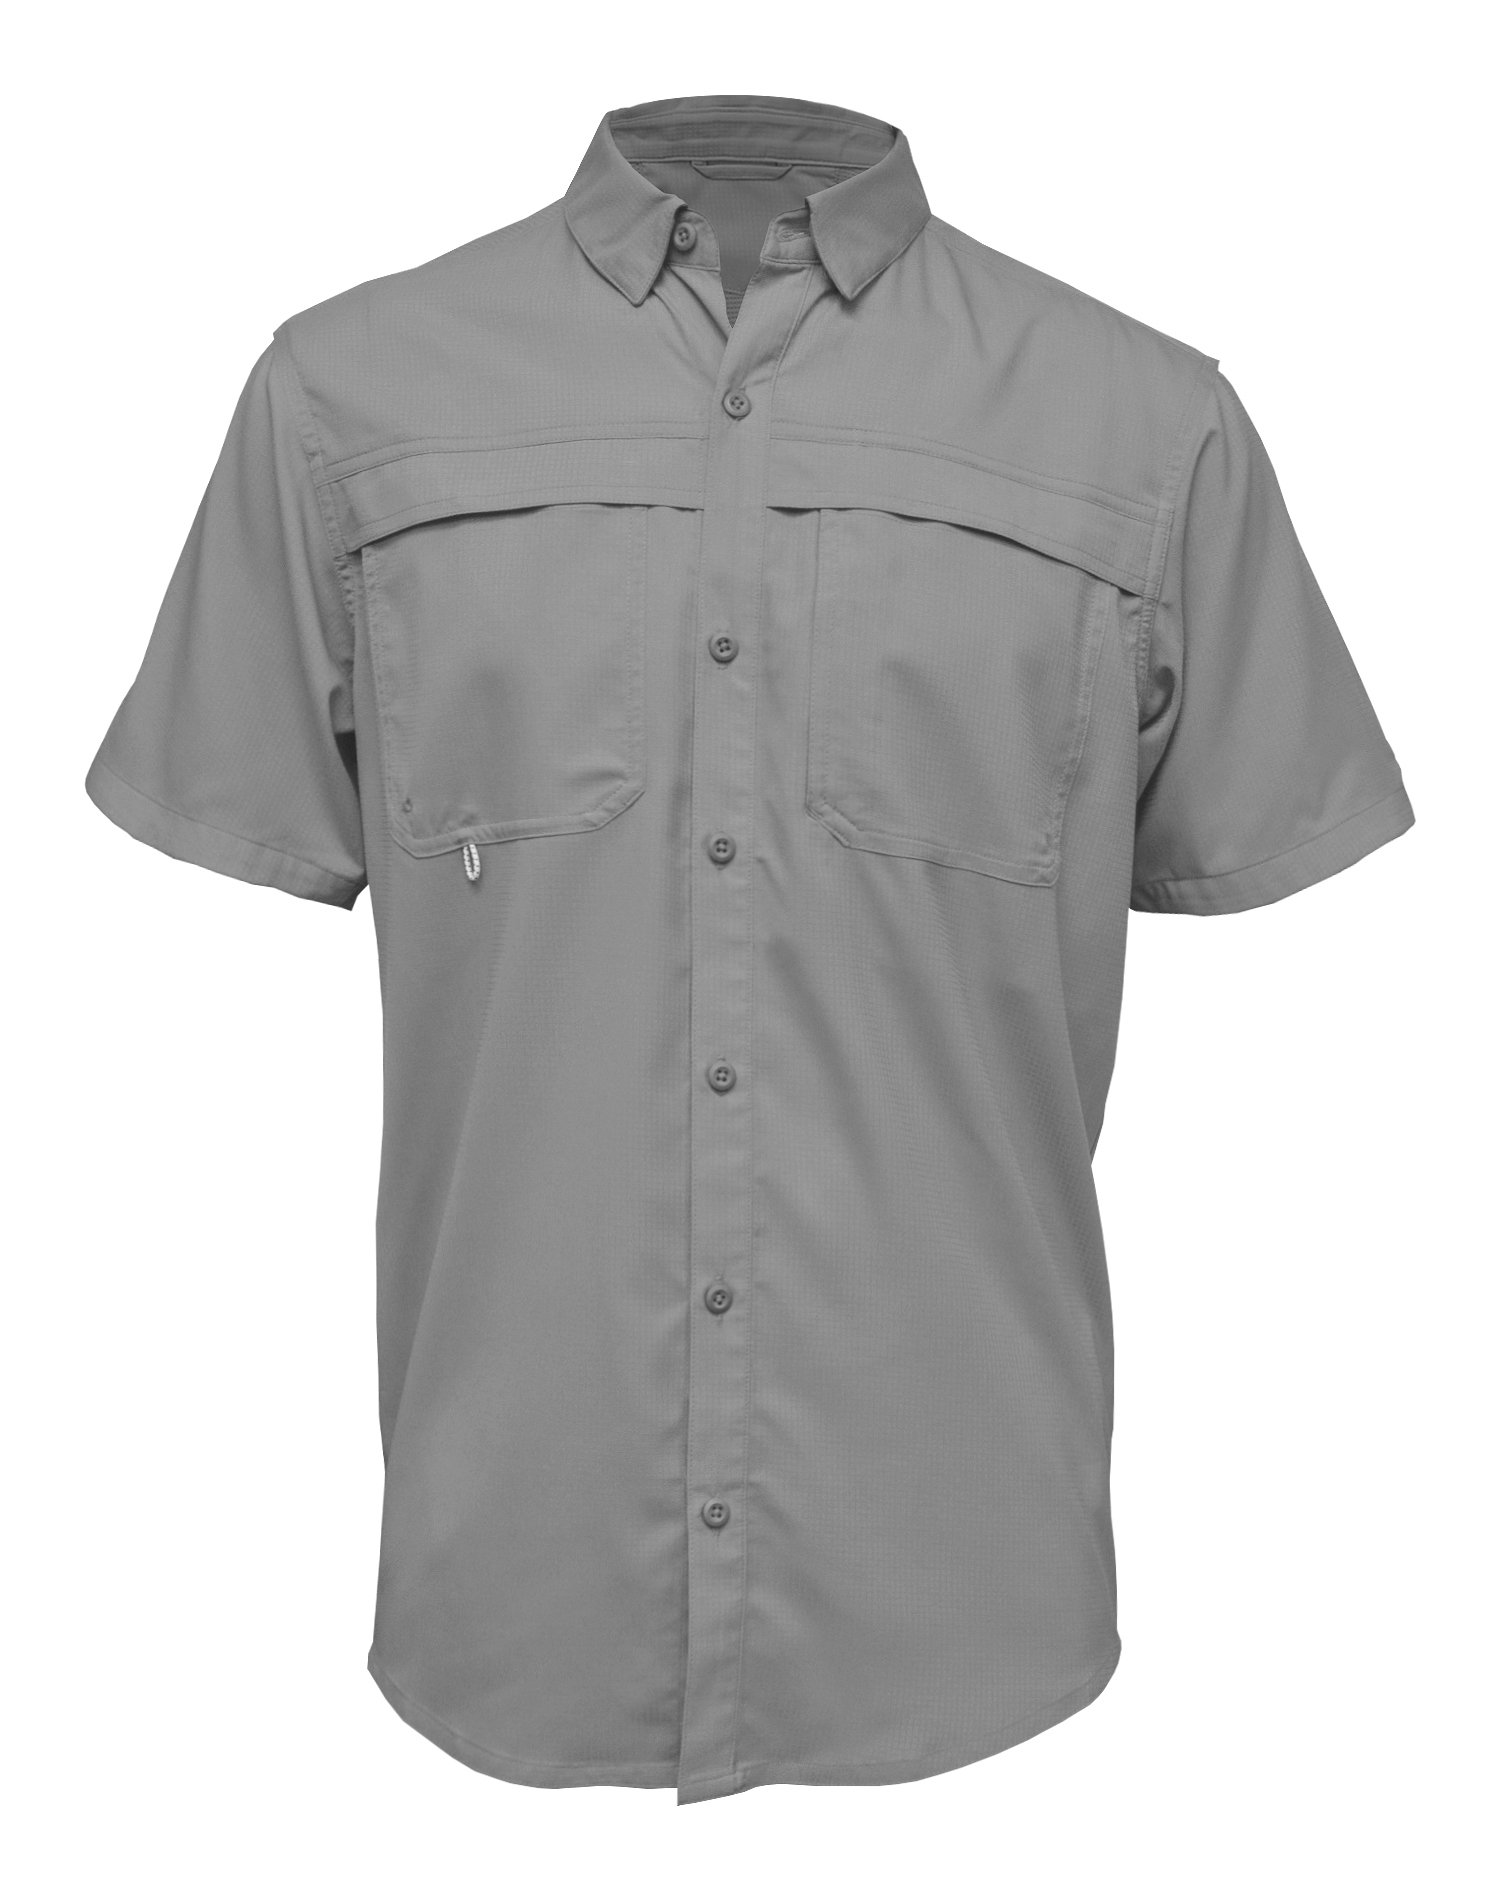 BAW Athletic Wear 3100 - Adult Short Sleeve Fishing Shirt $23.10